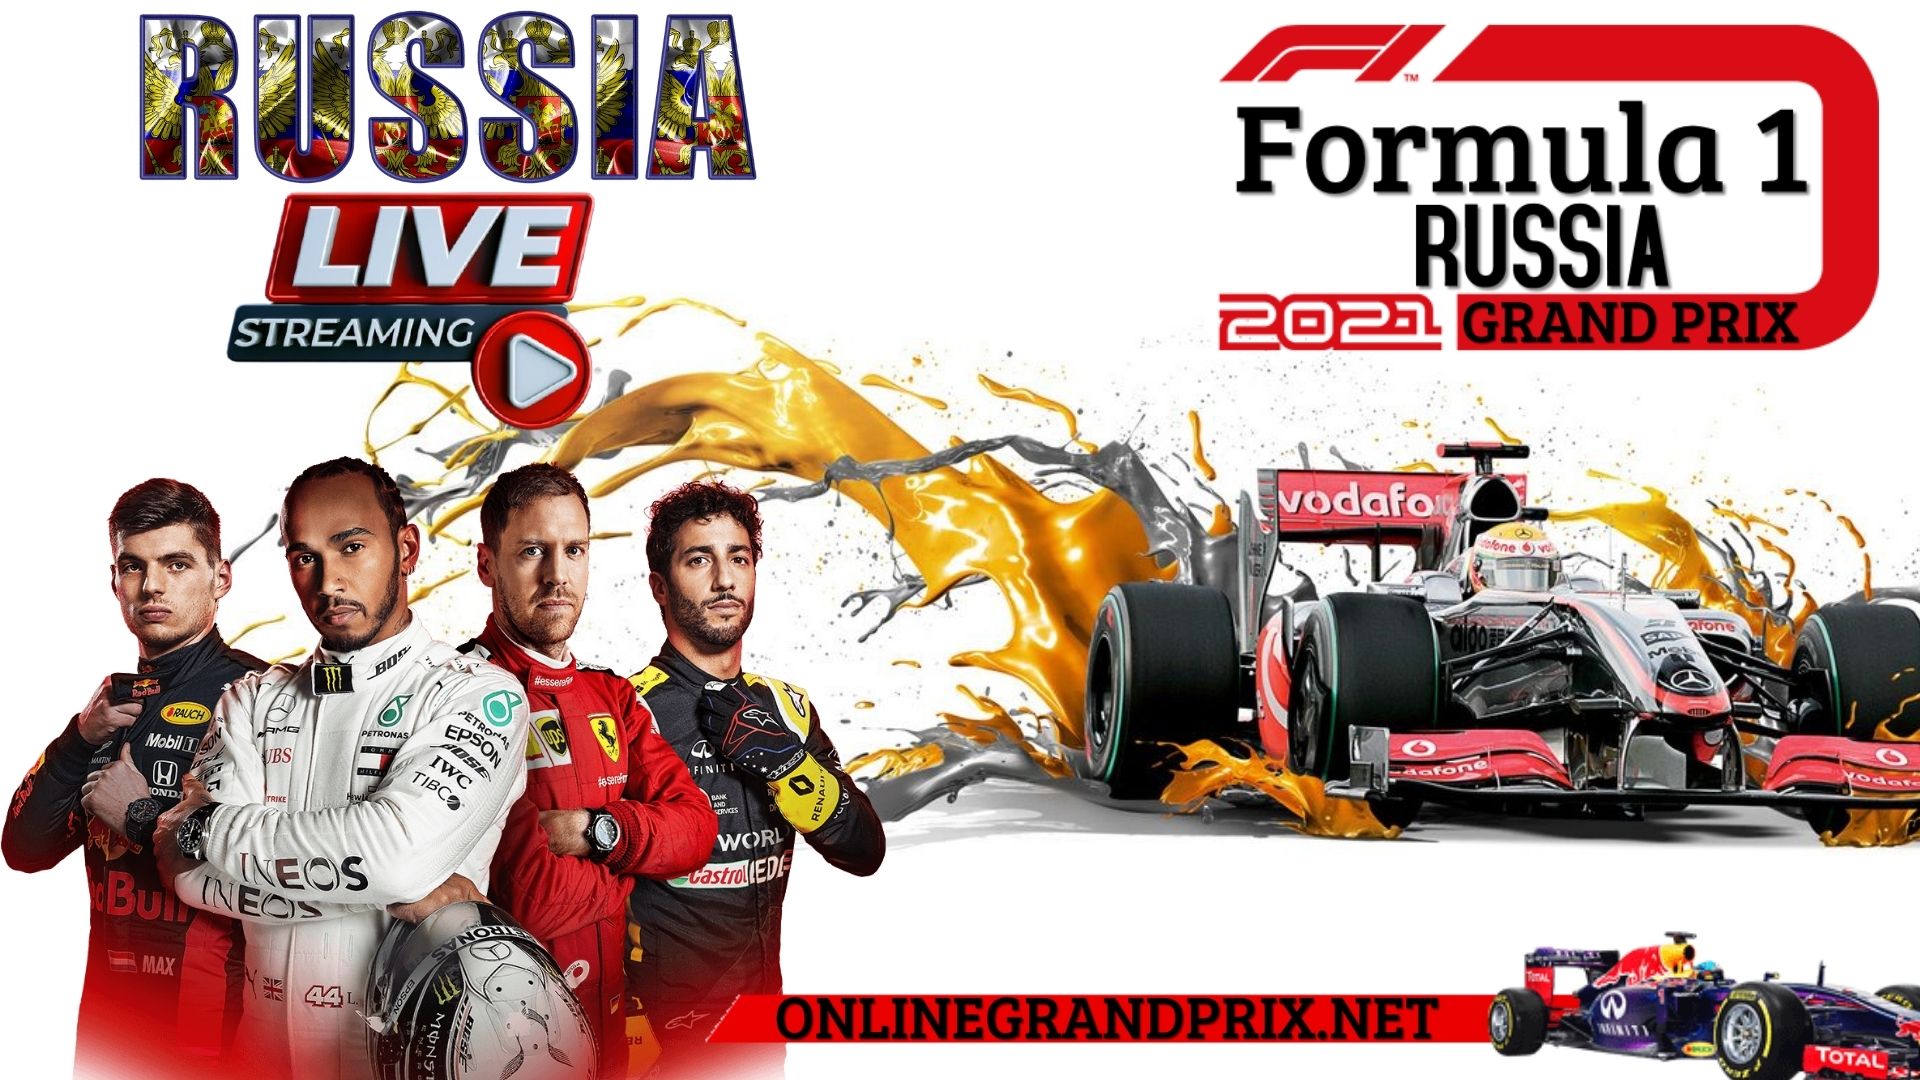 2018-russian-grand-prix-of-formula1-live-online